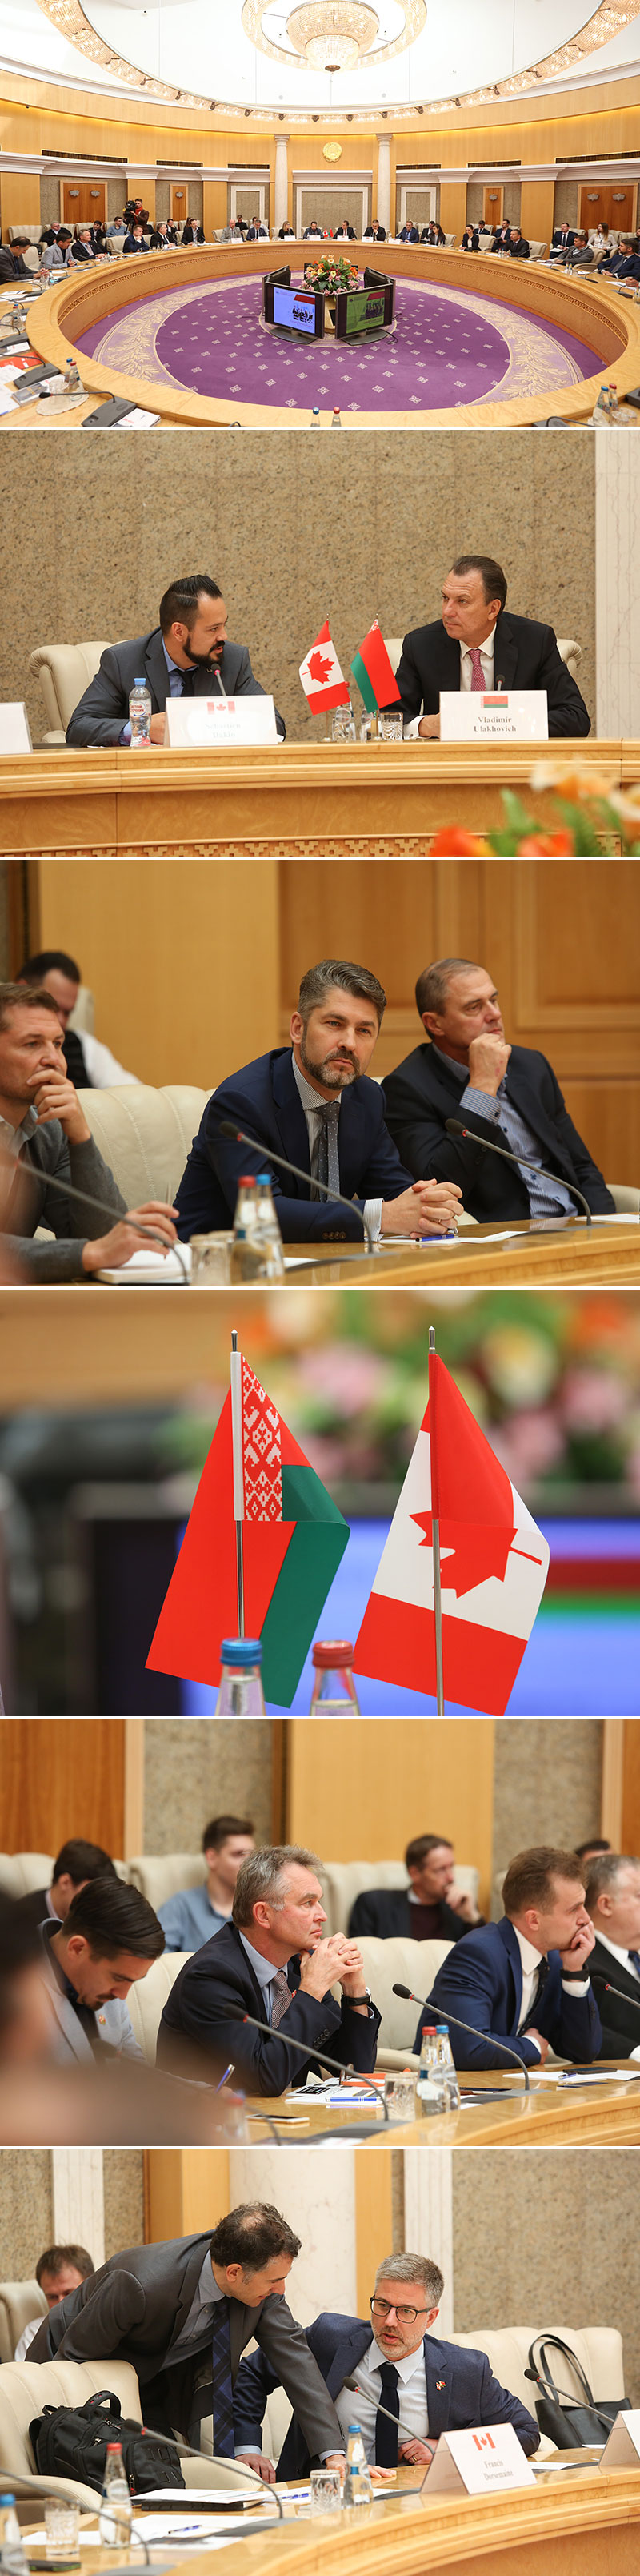 Belarusian-Canadian business forum in Minsk (September 2018)